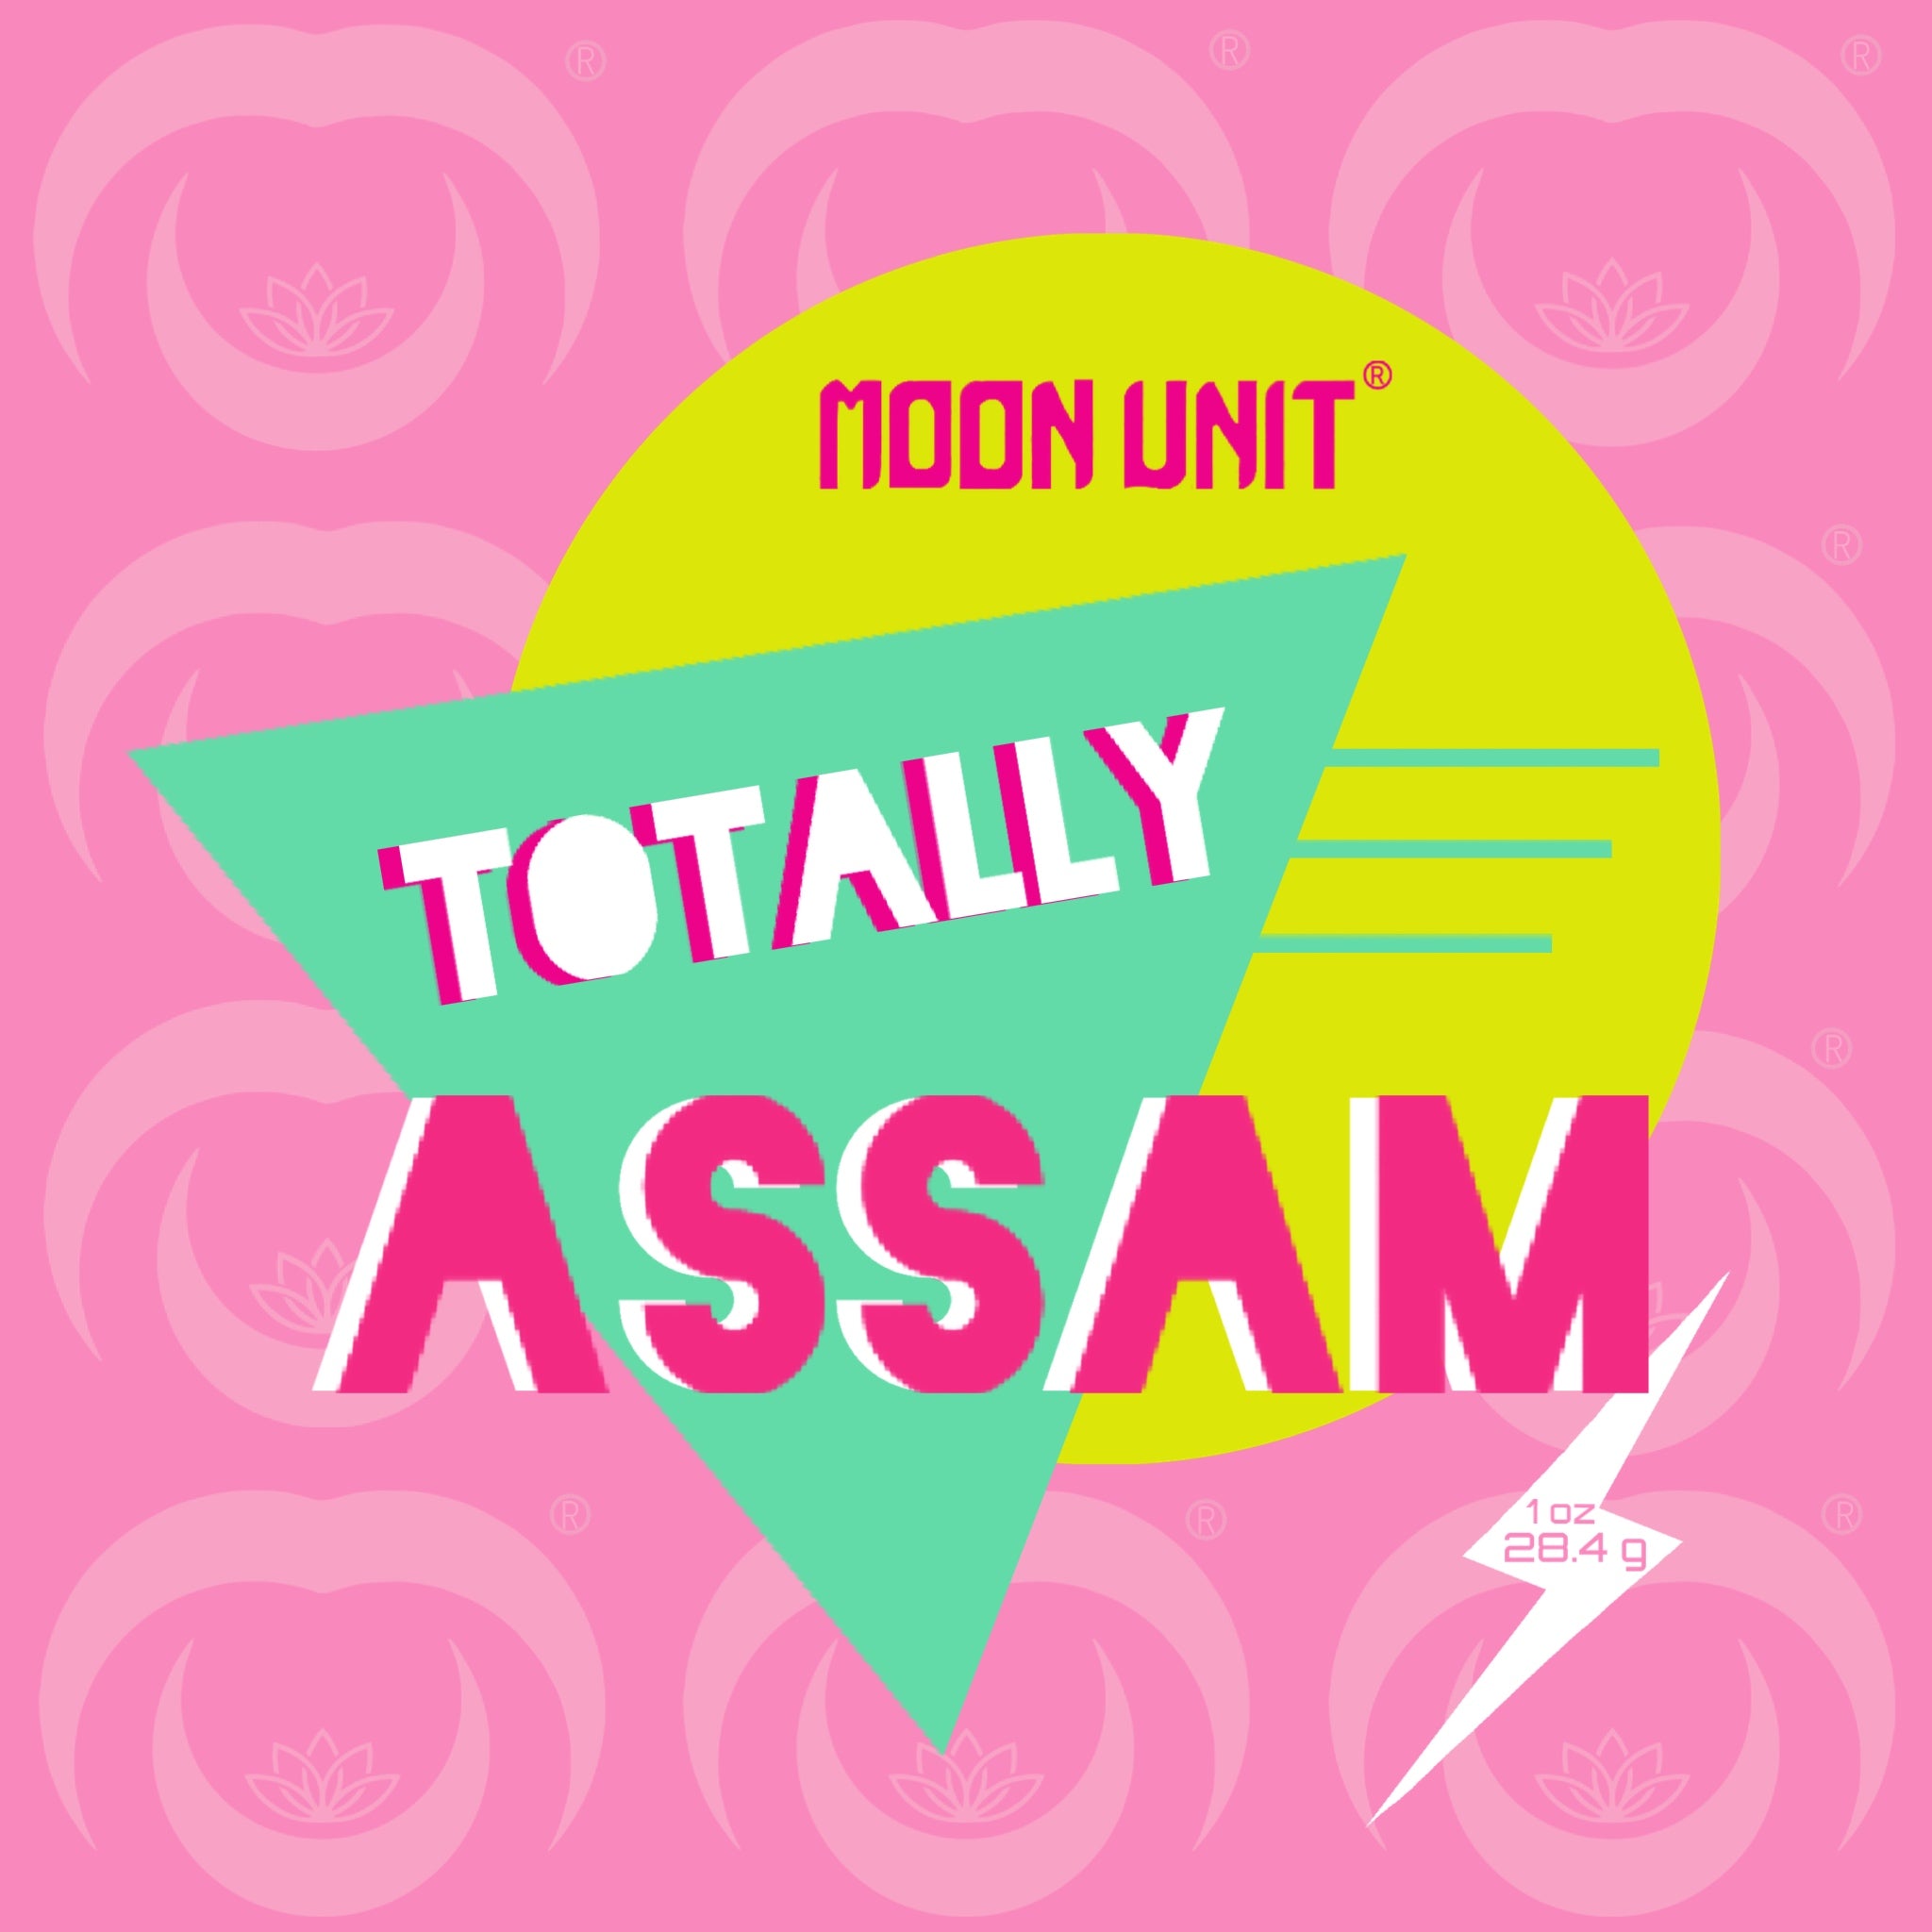 Moon unit tea : totally assam